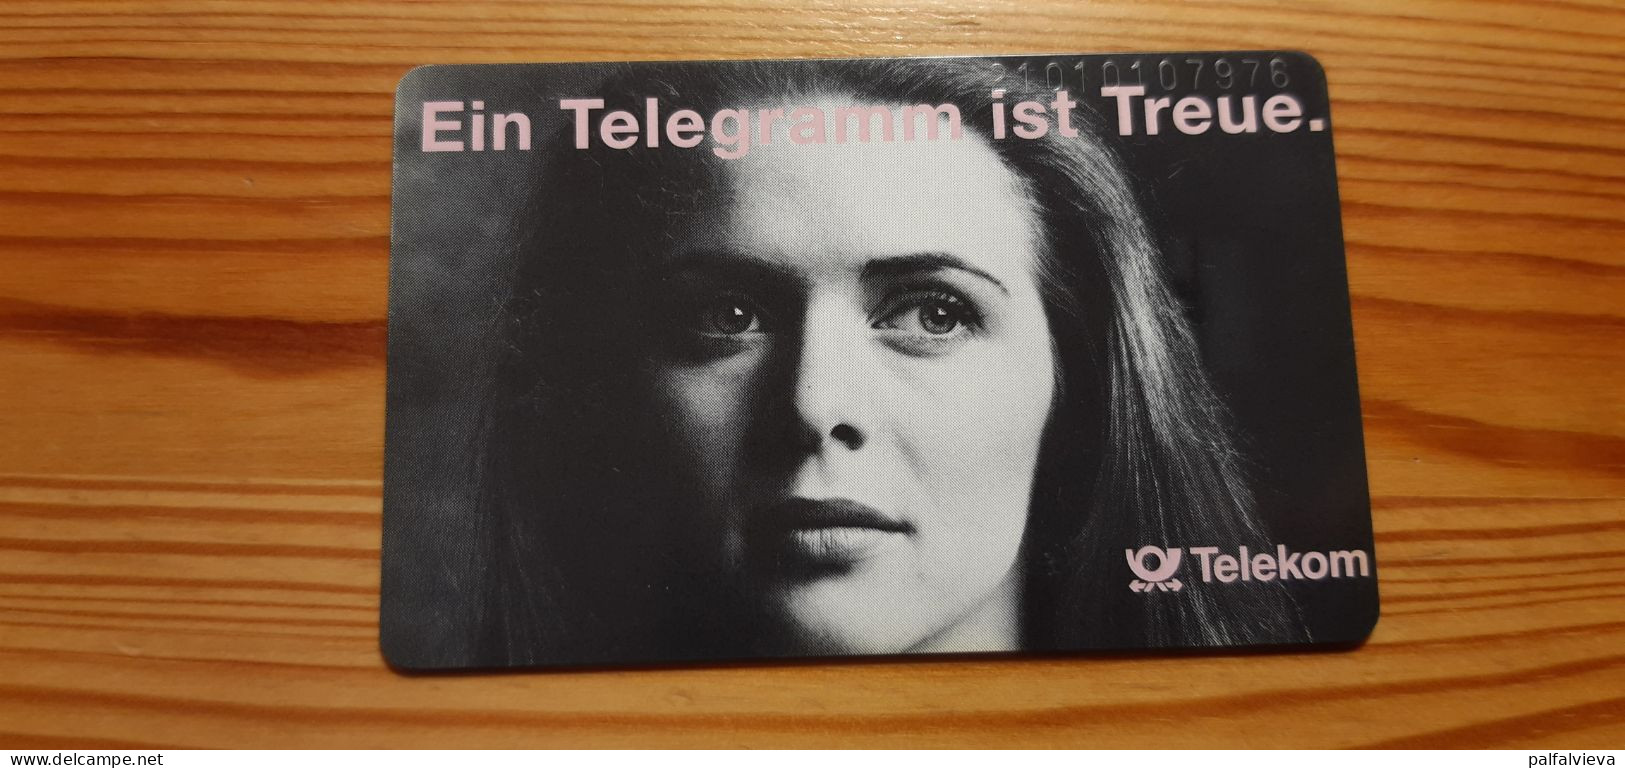 Phonecard Germany P 19 B 10.90. Telegramm, Woman 50.000 Ex. - P & PD-Series: Schalterkarten Der Dt. Telekom